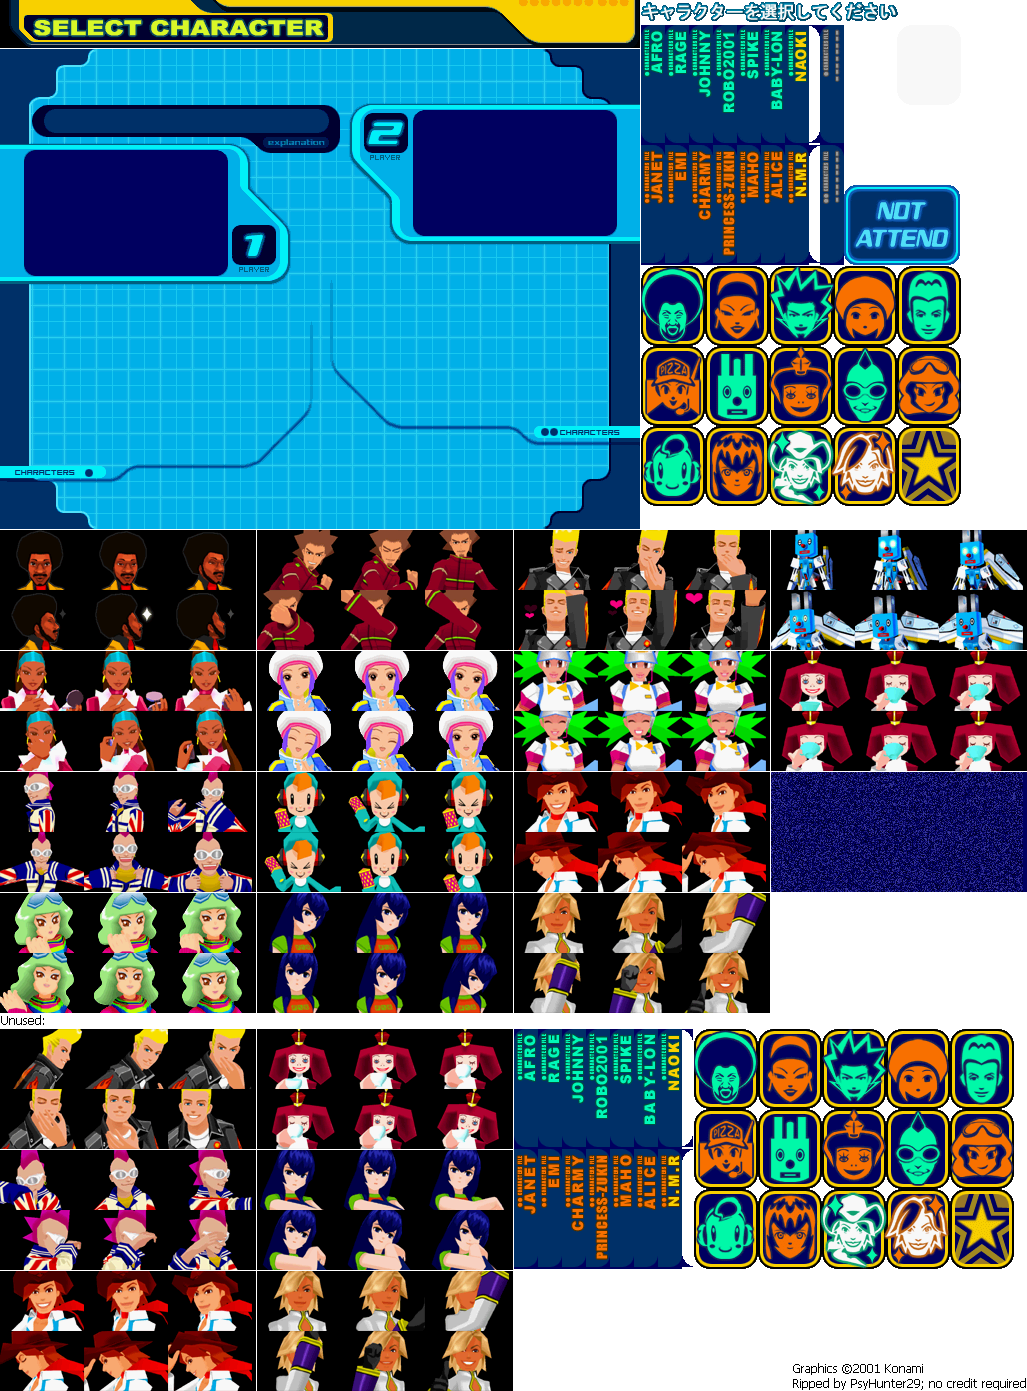 Dance Dance Revolution 5thMIX - Character Select